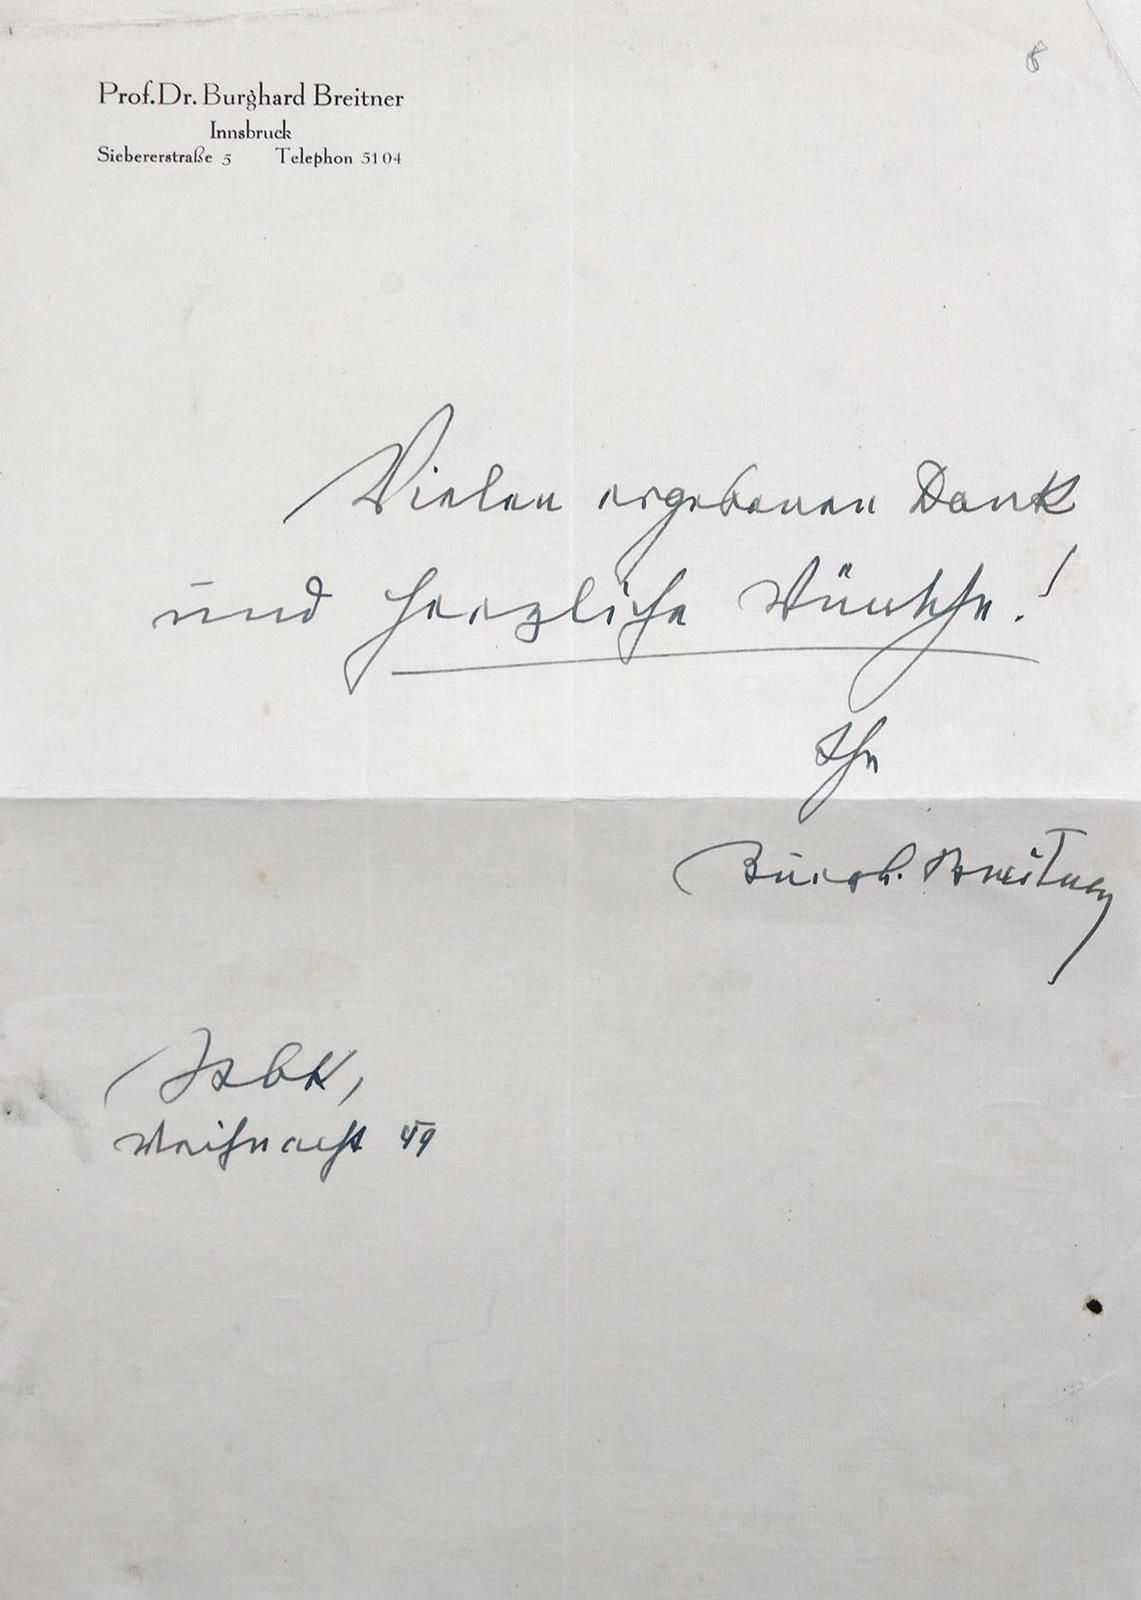 Breitner, Burghard, 外科医生 "西伯利亚的天使"（1884-1956）。亲笔签名。在个人信纸上签名的信件 "许多真诚的感谢和热情的祝福"。因&hellip;